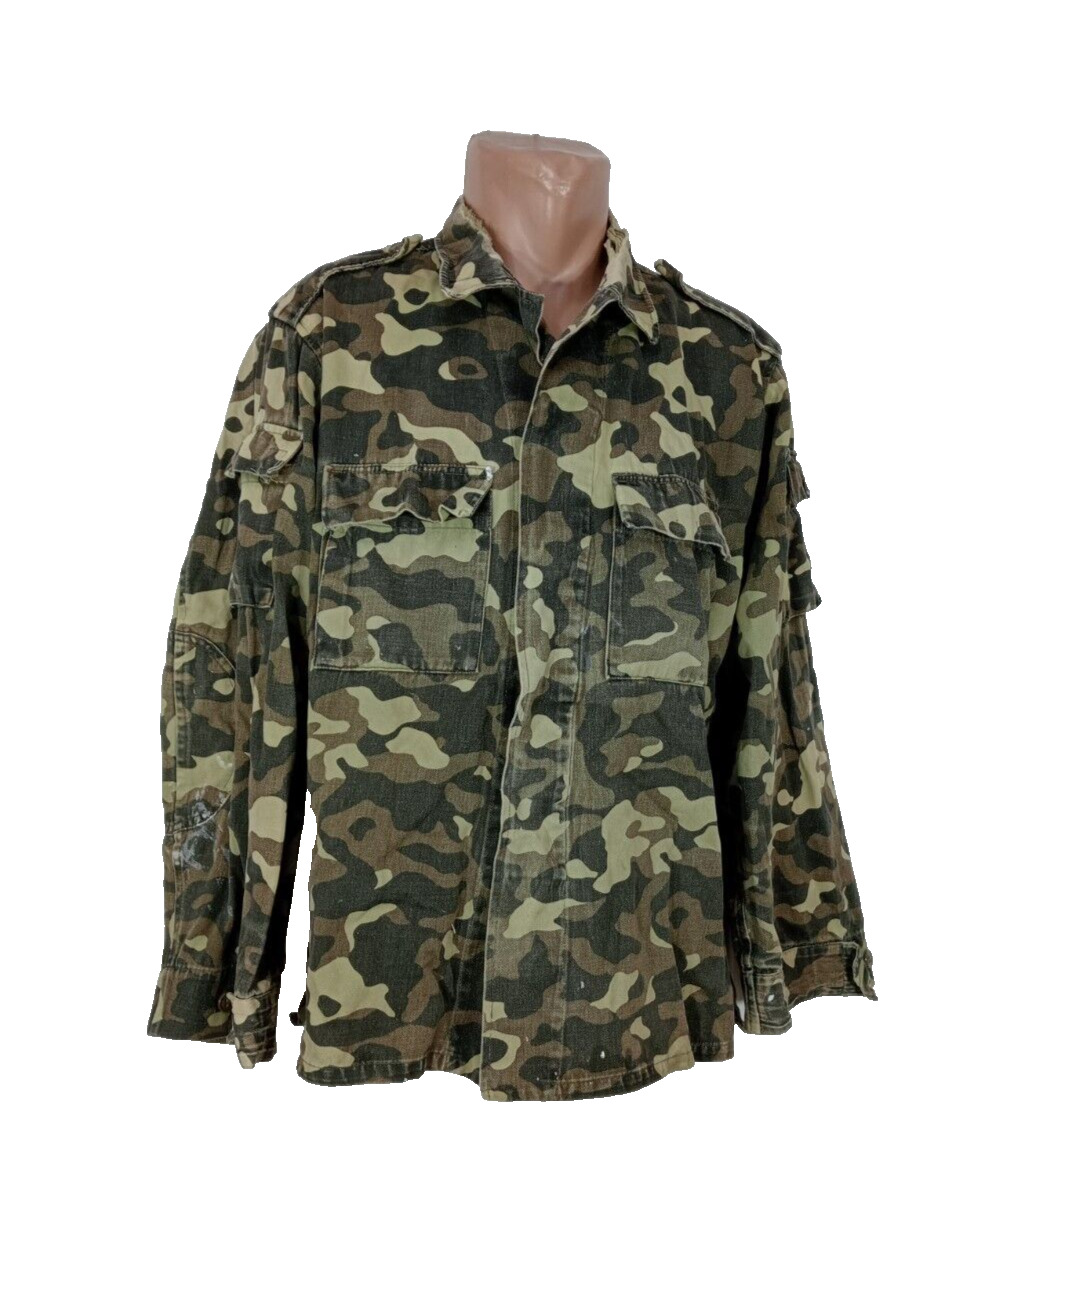 Jacket Camouflage Military Ukraine Army Uniform Soldier Woodland Dubok Original